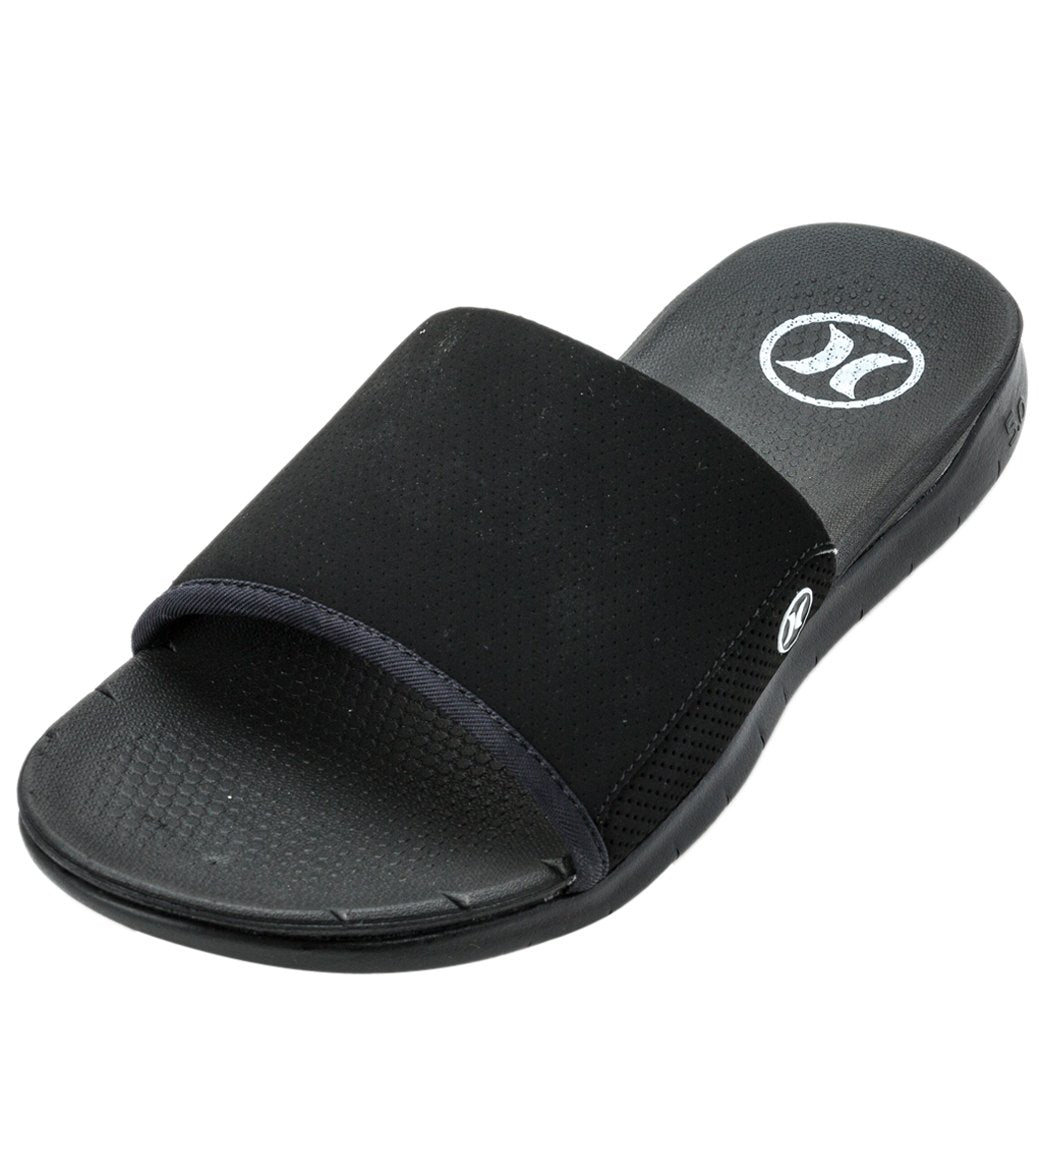 Hurley Men's Phantom Free Slide Sandals at SwimOutlet.com